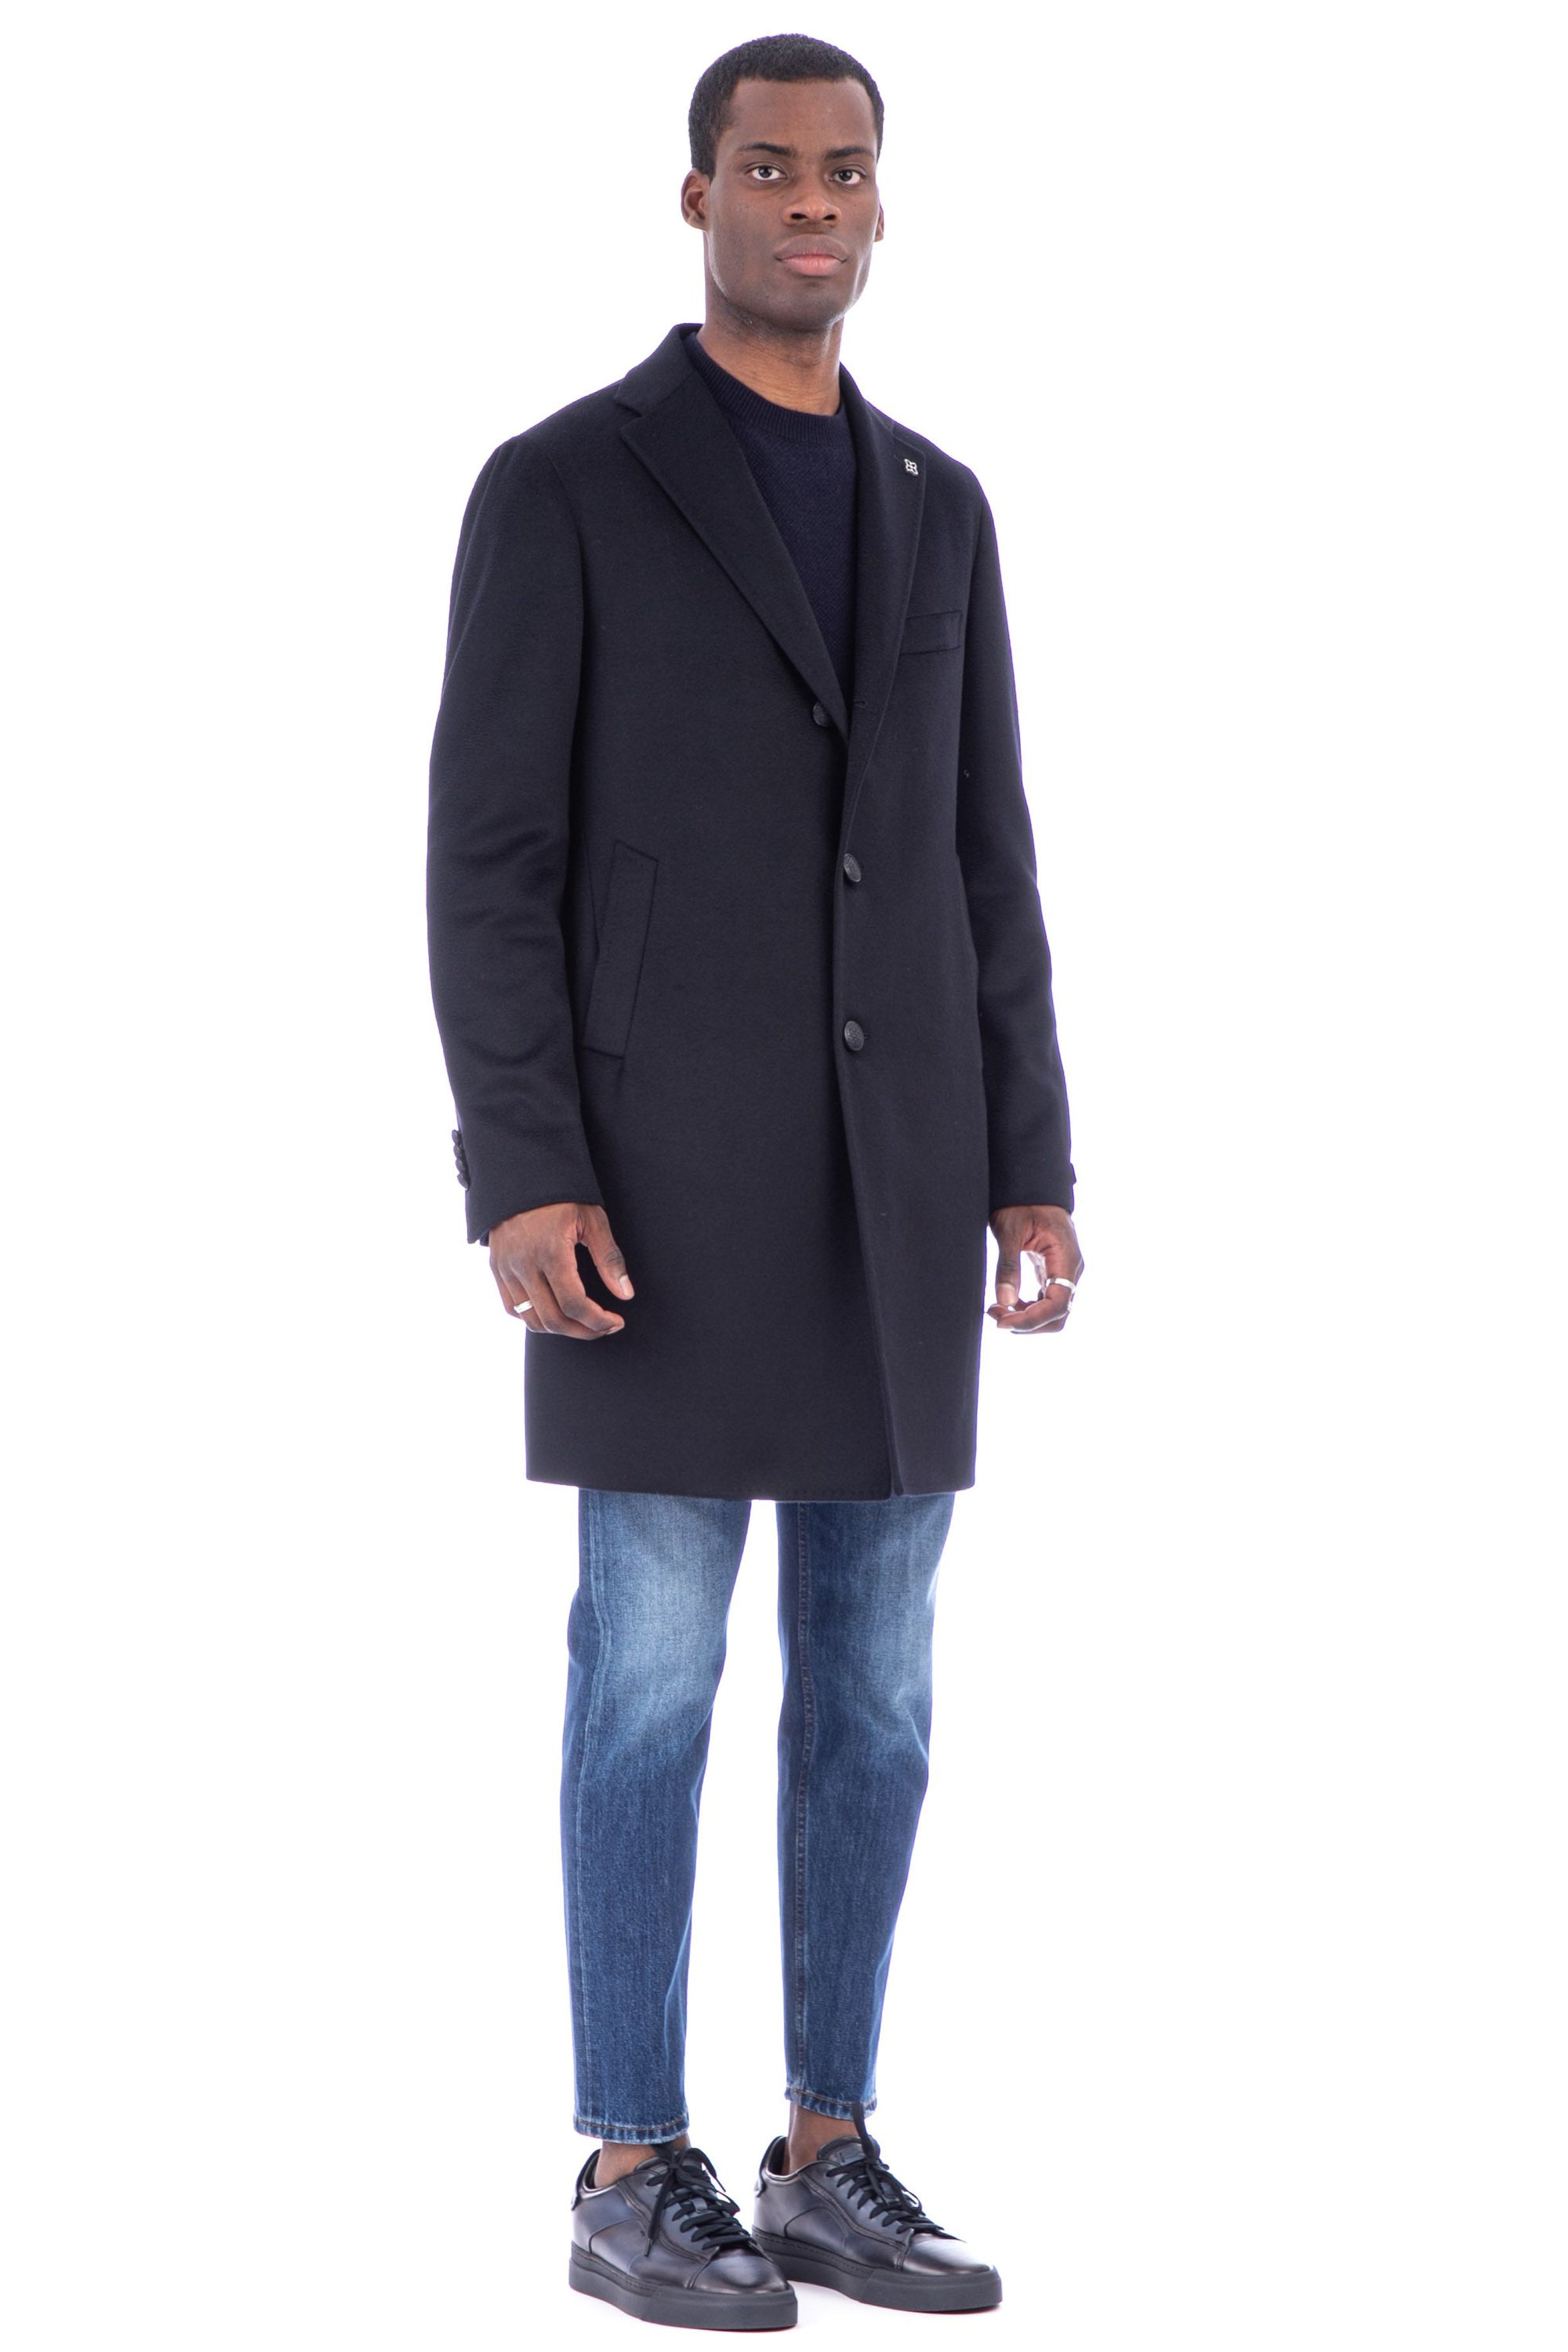 Baronet model wool coat